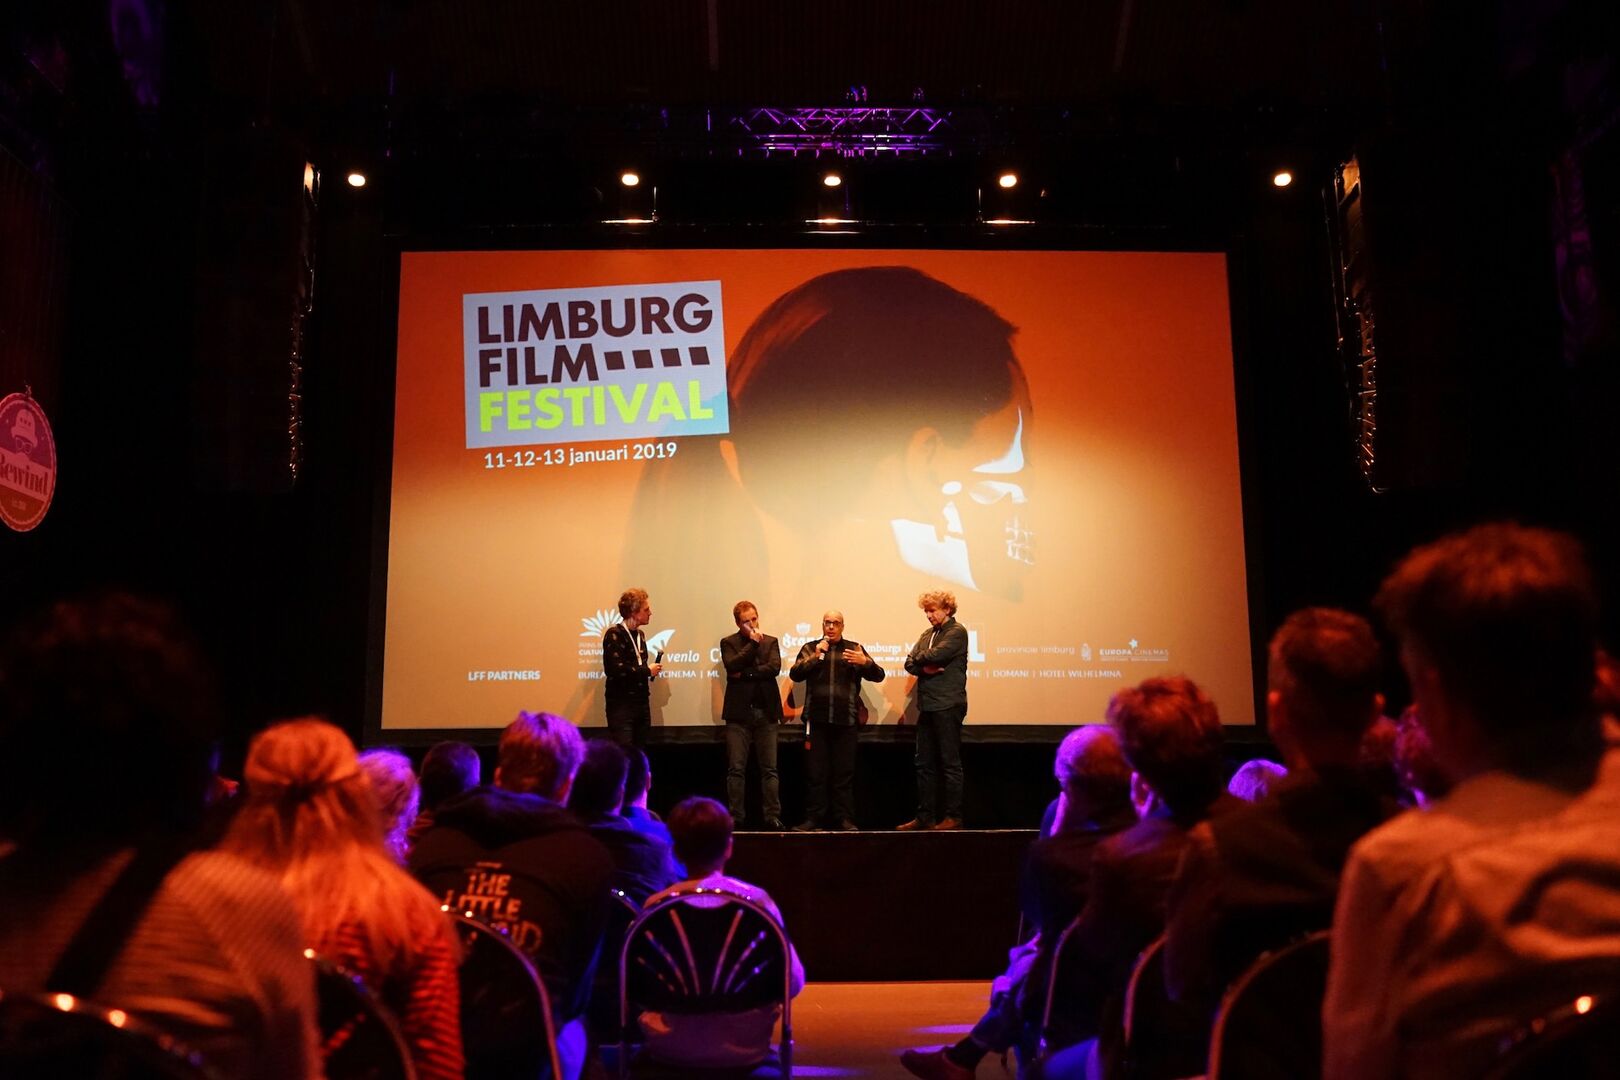 Limburg Film Festival (LFF)